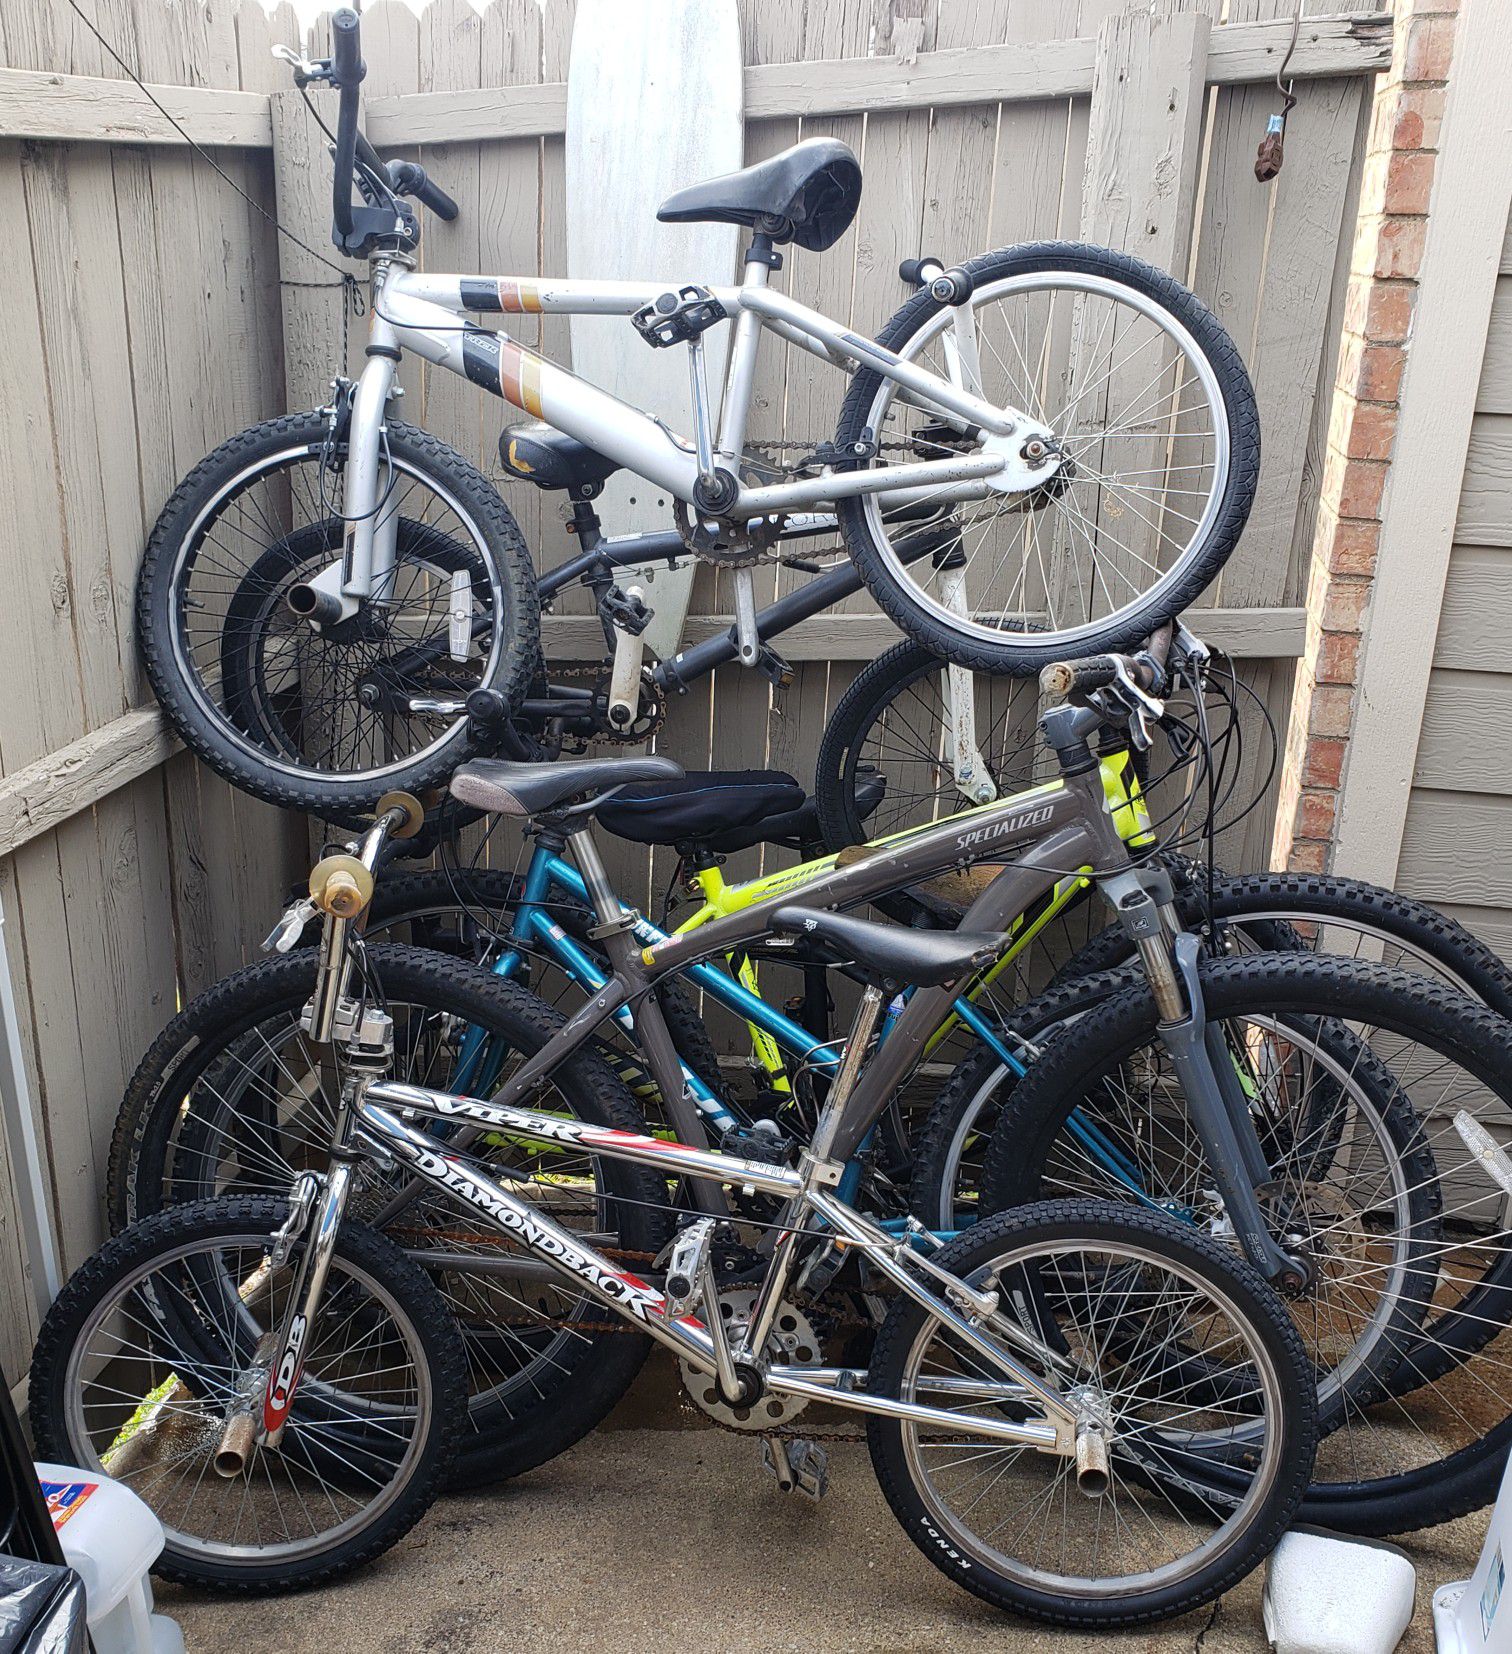 Whole lotta Bikes